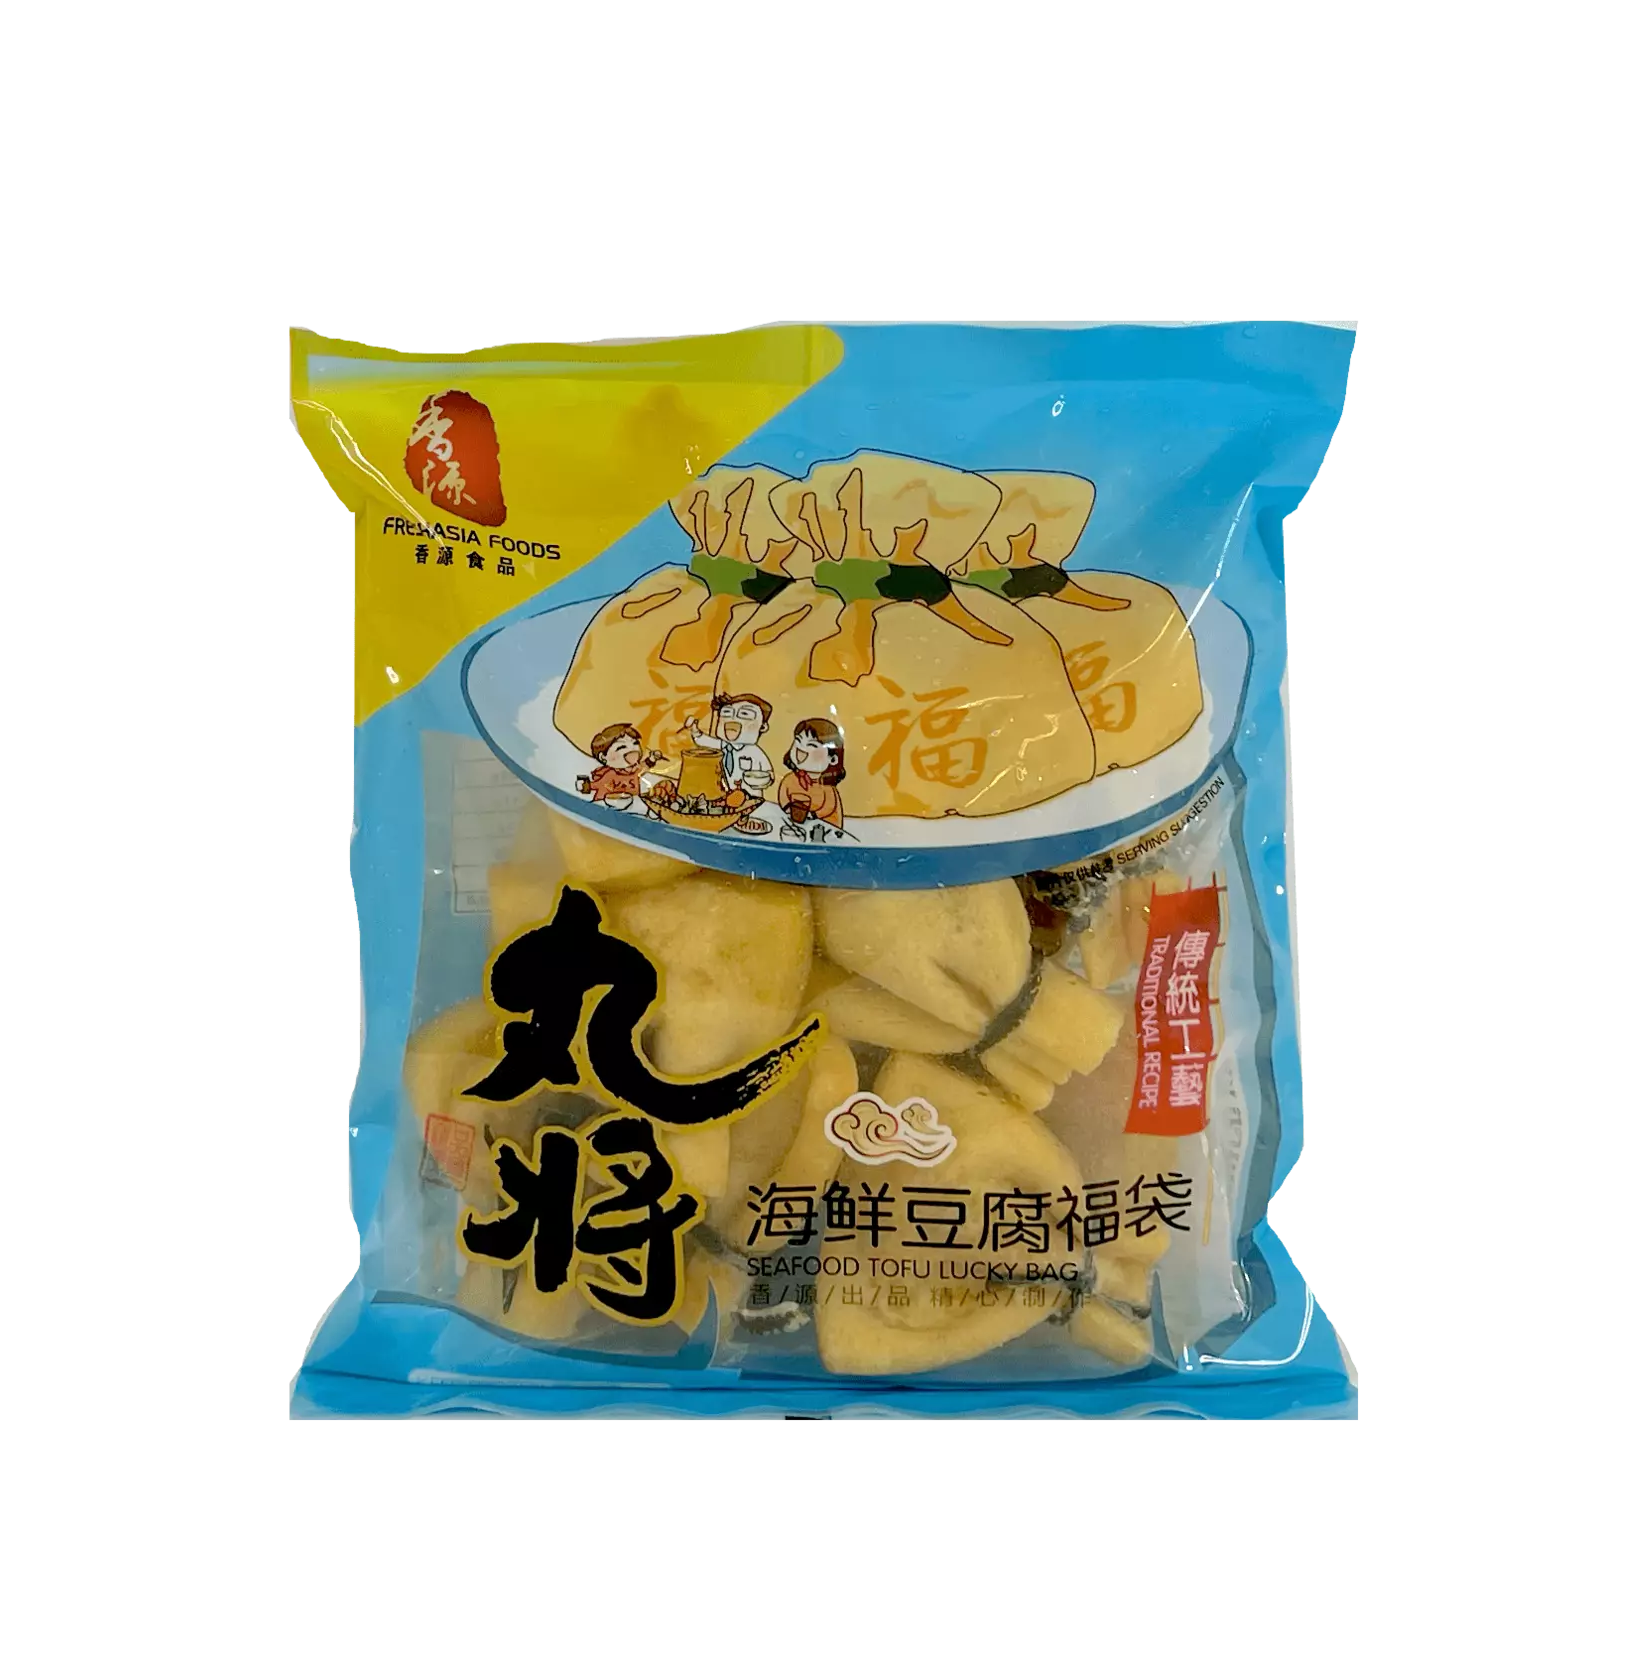 Skaldjur Tofu Lucky Bag Fryst 200 g WJ Freshasia Kina